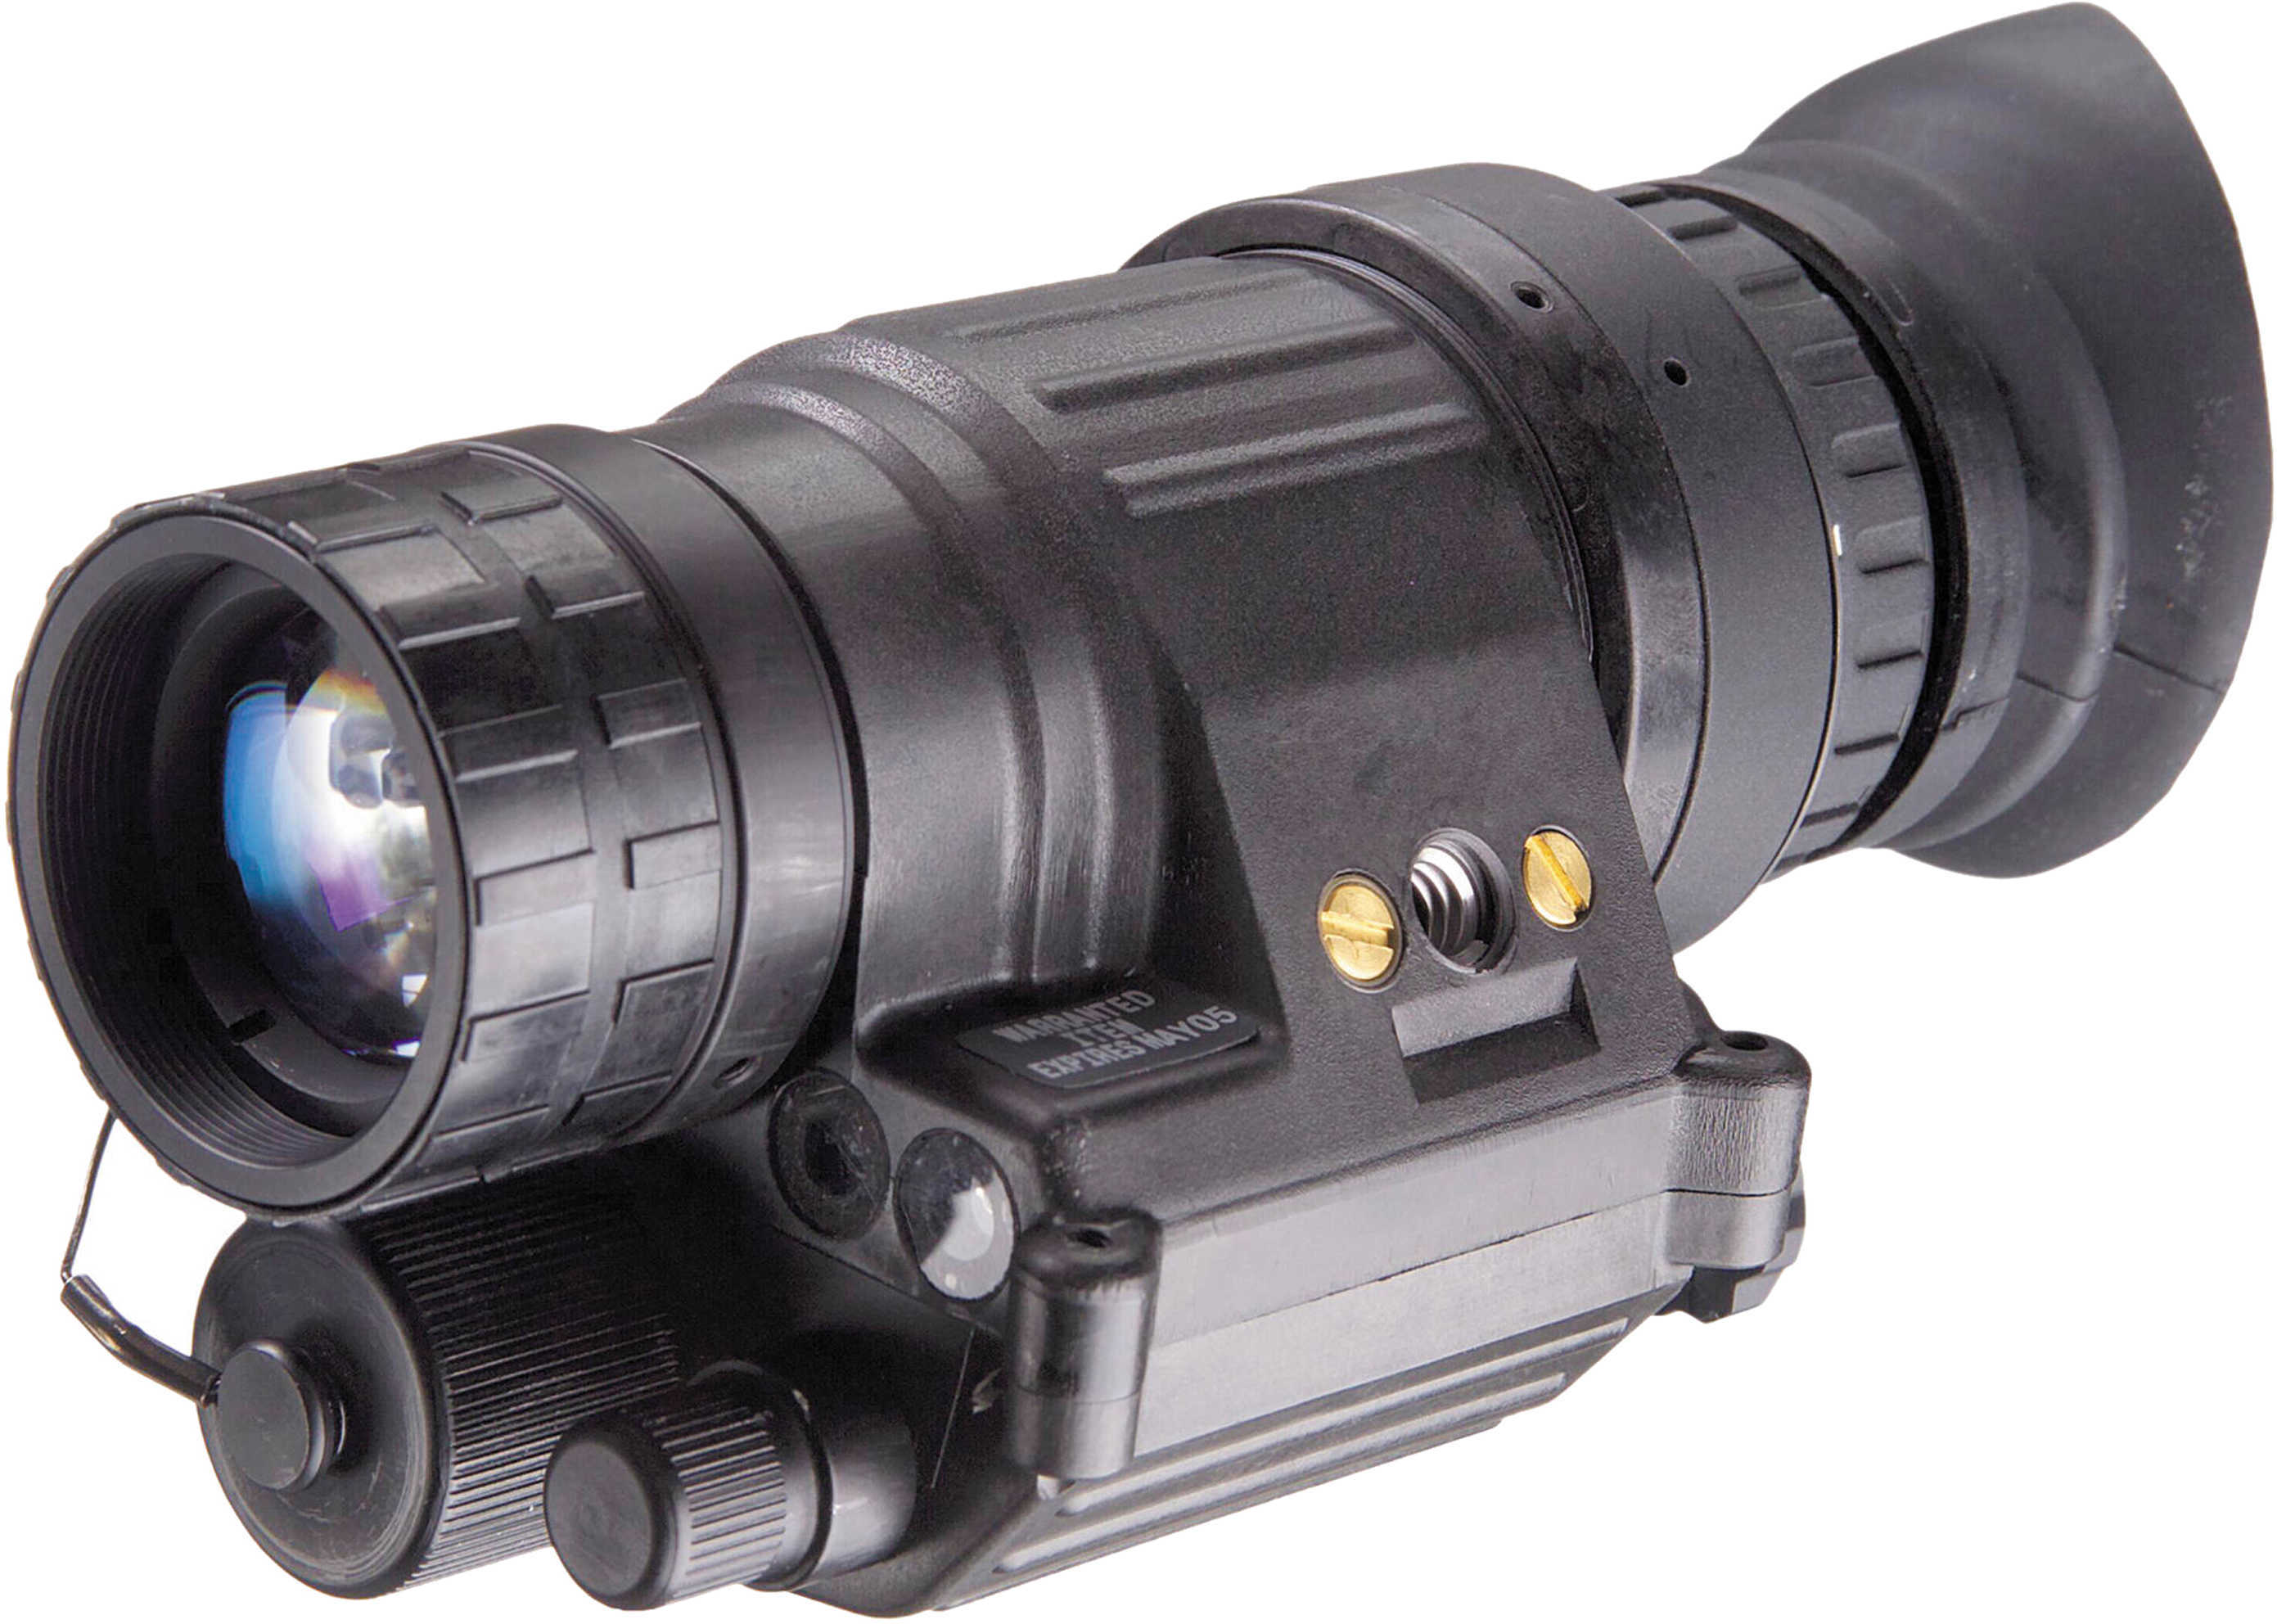 ATN PVS14-3 lightweight and versatile Night Vision Monocular